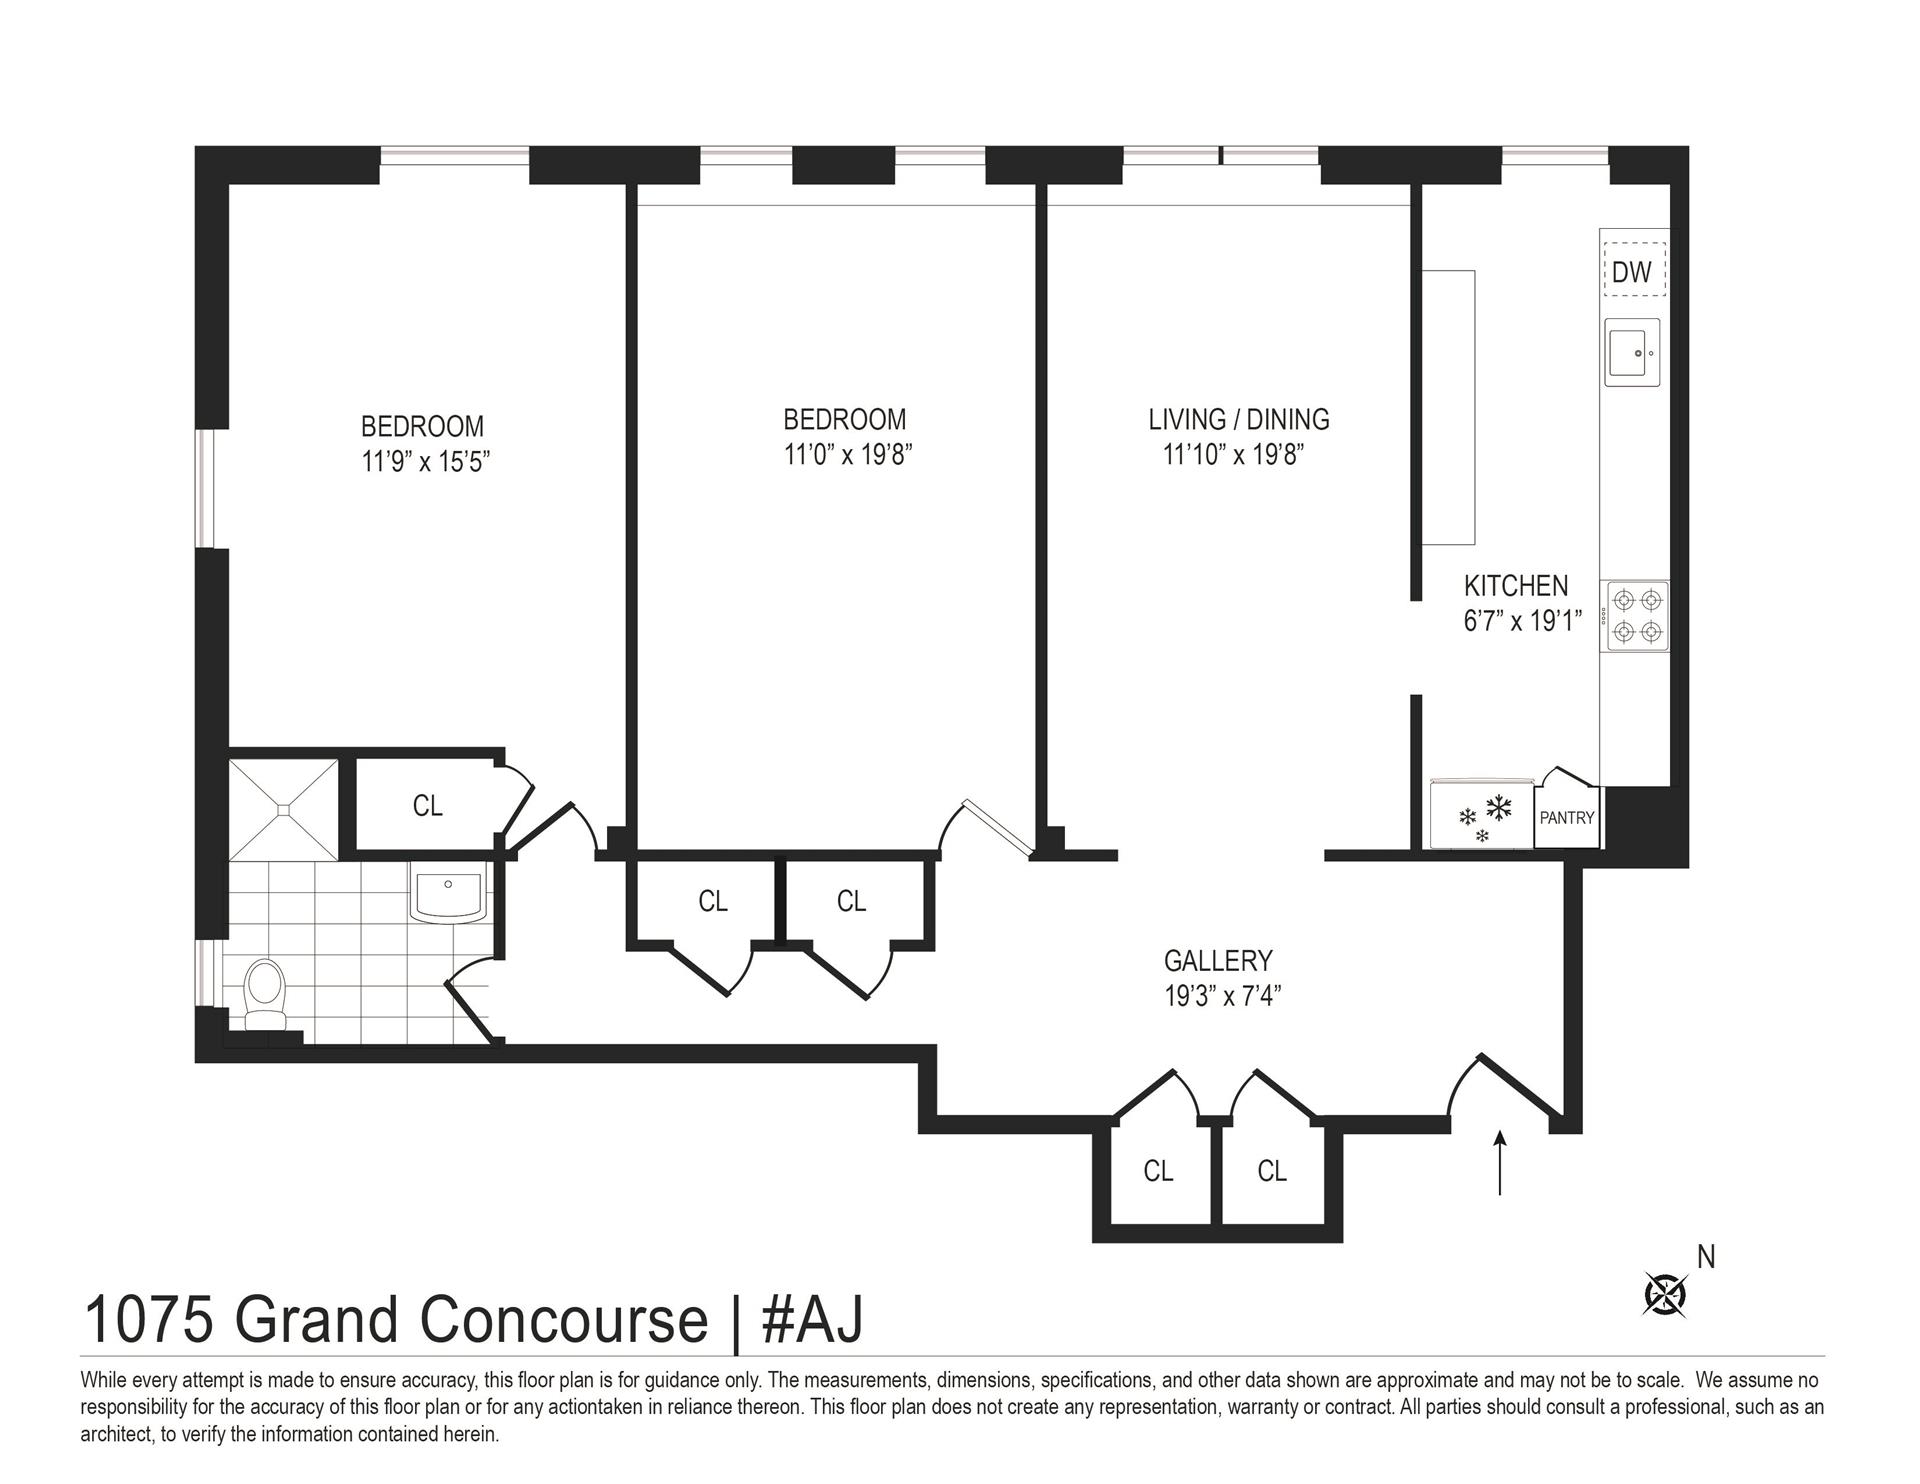 Floorplan for 1075 Grand Concourse, AJ